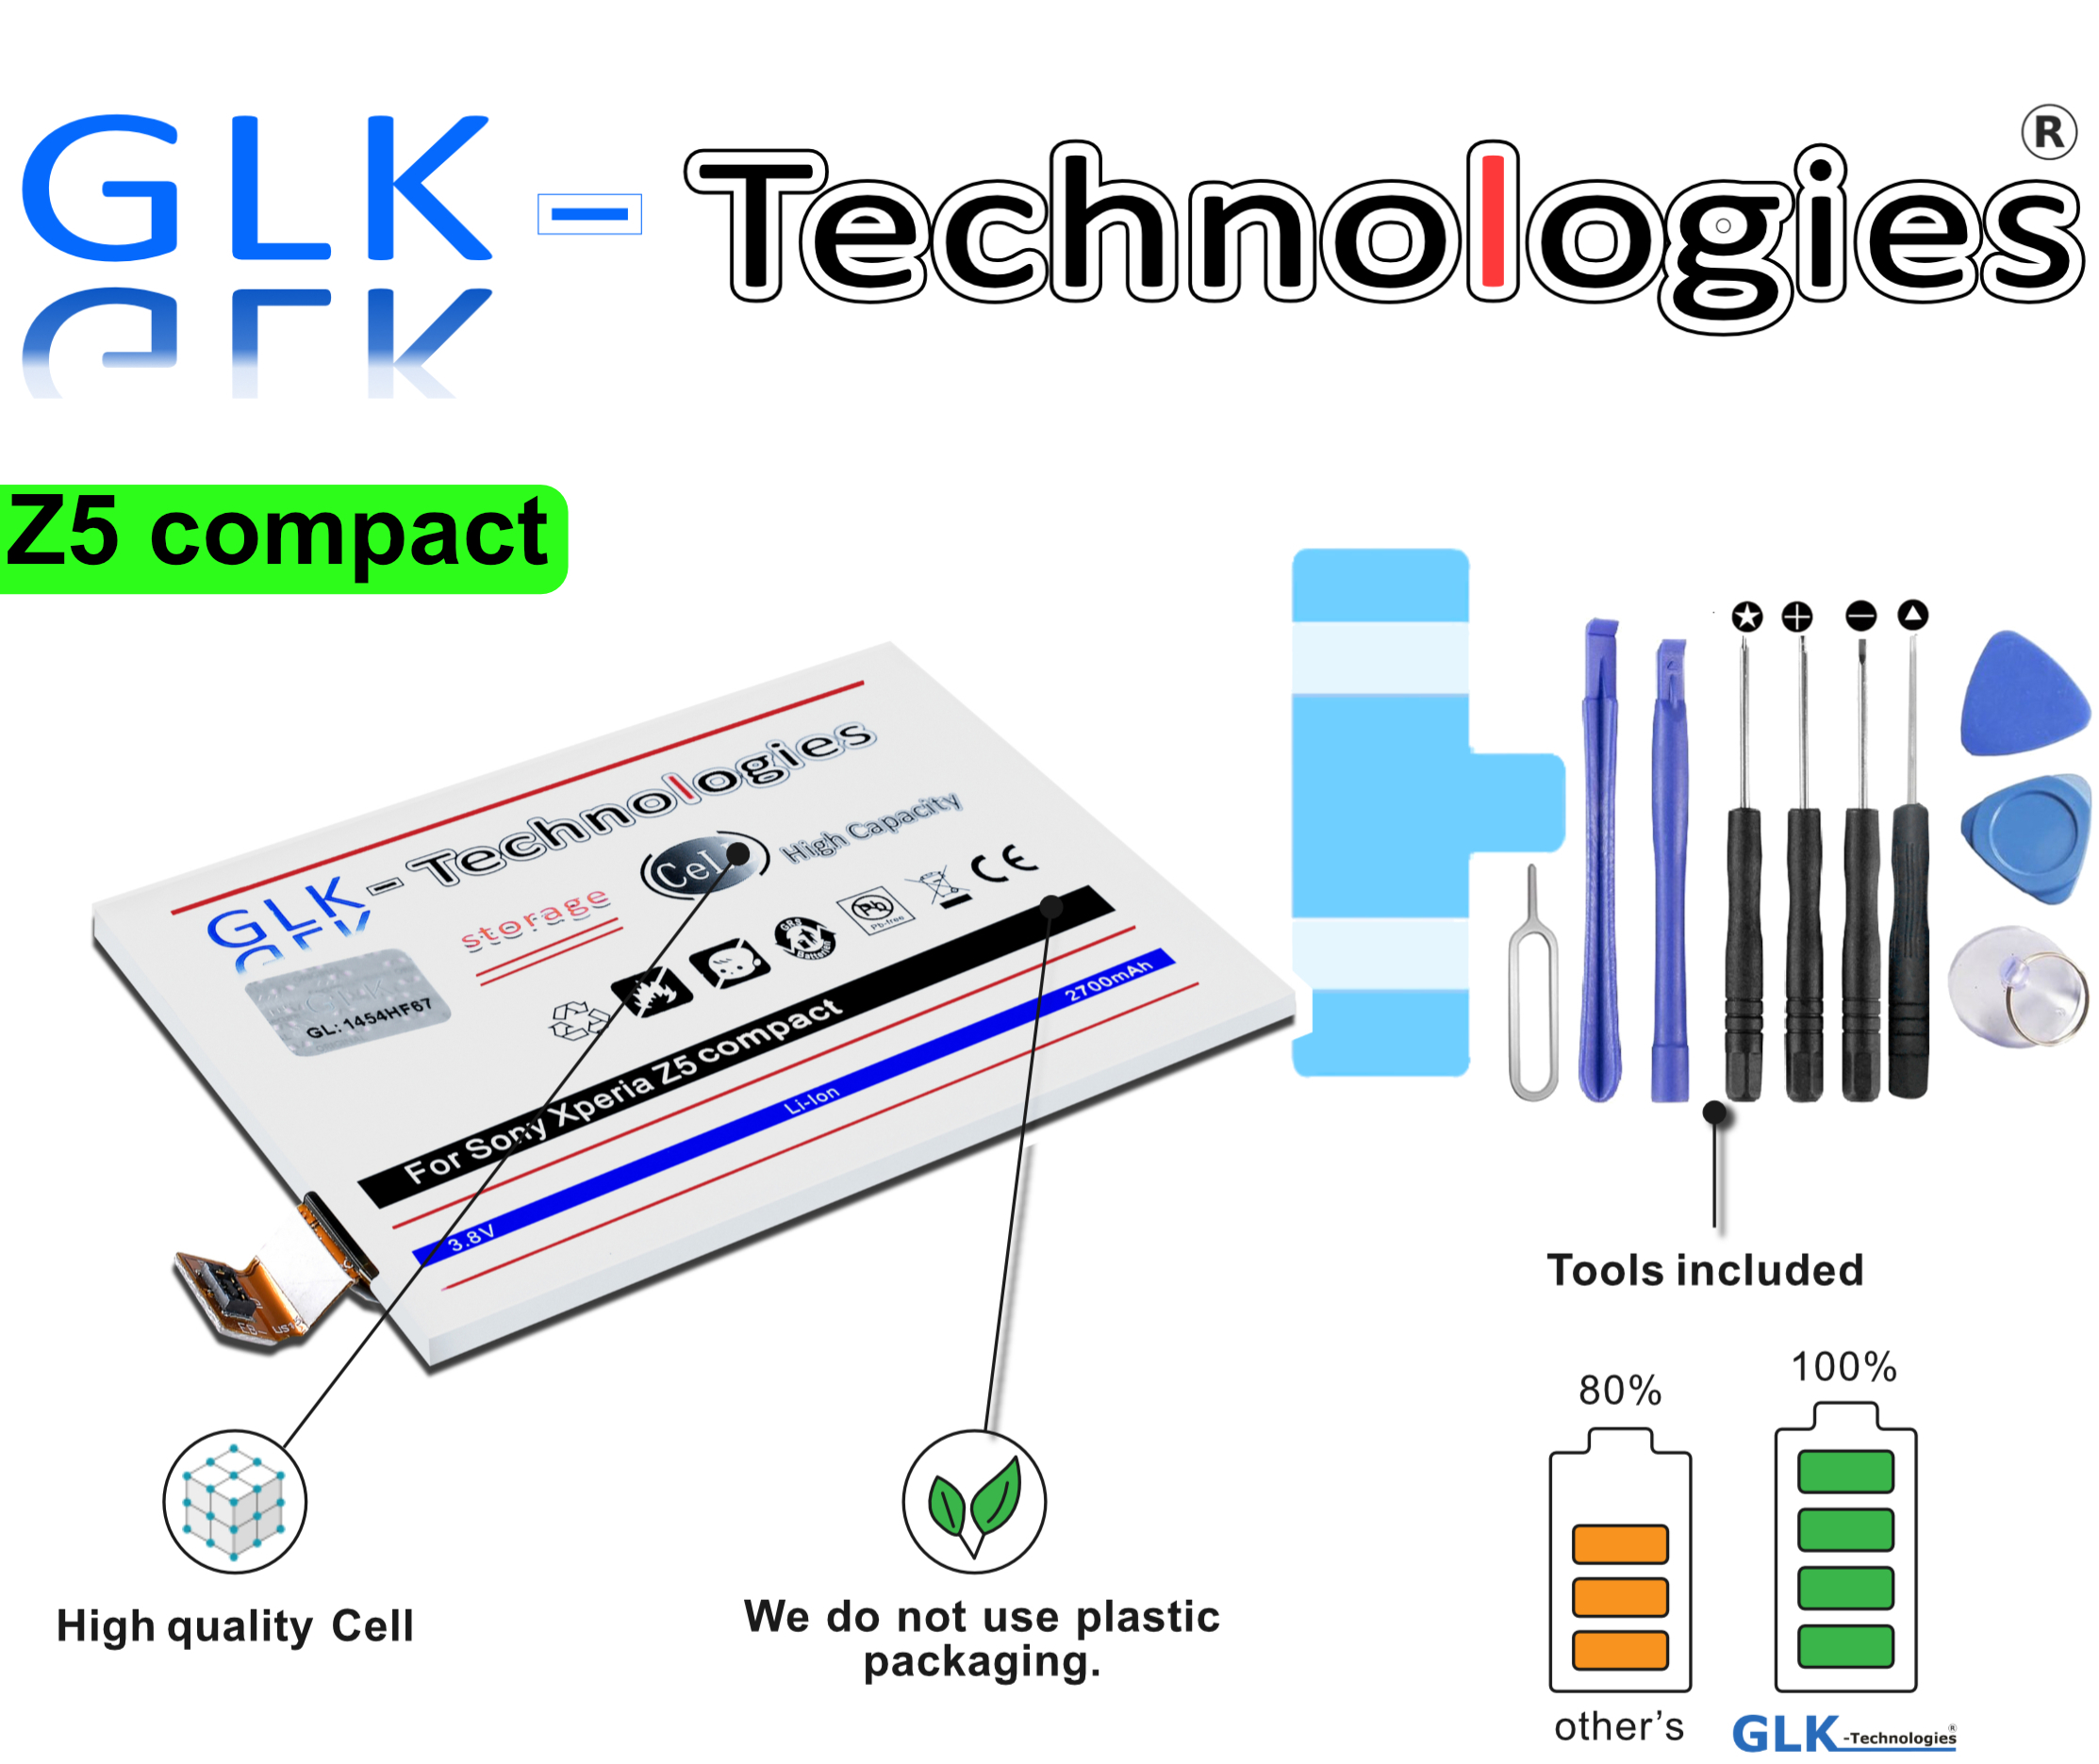 GLK-TECHNOLOGIES High Power Akku für Werkzeug Compact Z5 Sony Battery LIS1594ERPC Smartphone Ersatz inkl. mAh Li-Ion Akku 2700 Xperia